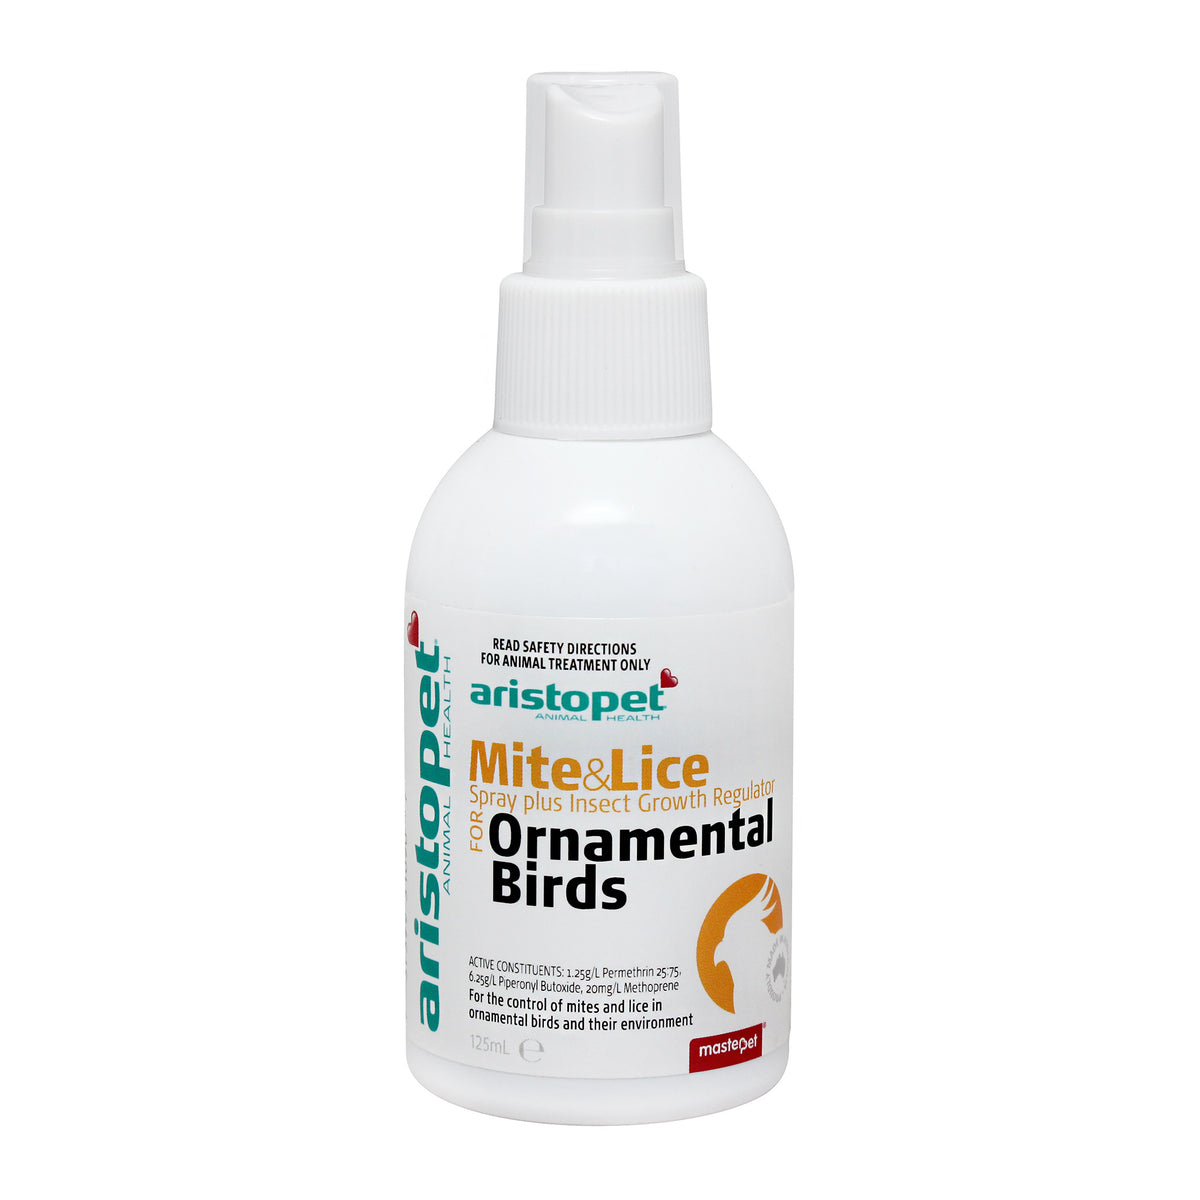 Aristopet Bird Lice and Mite Spray Plus IGR